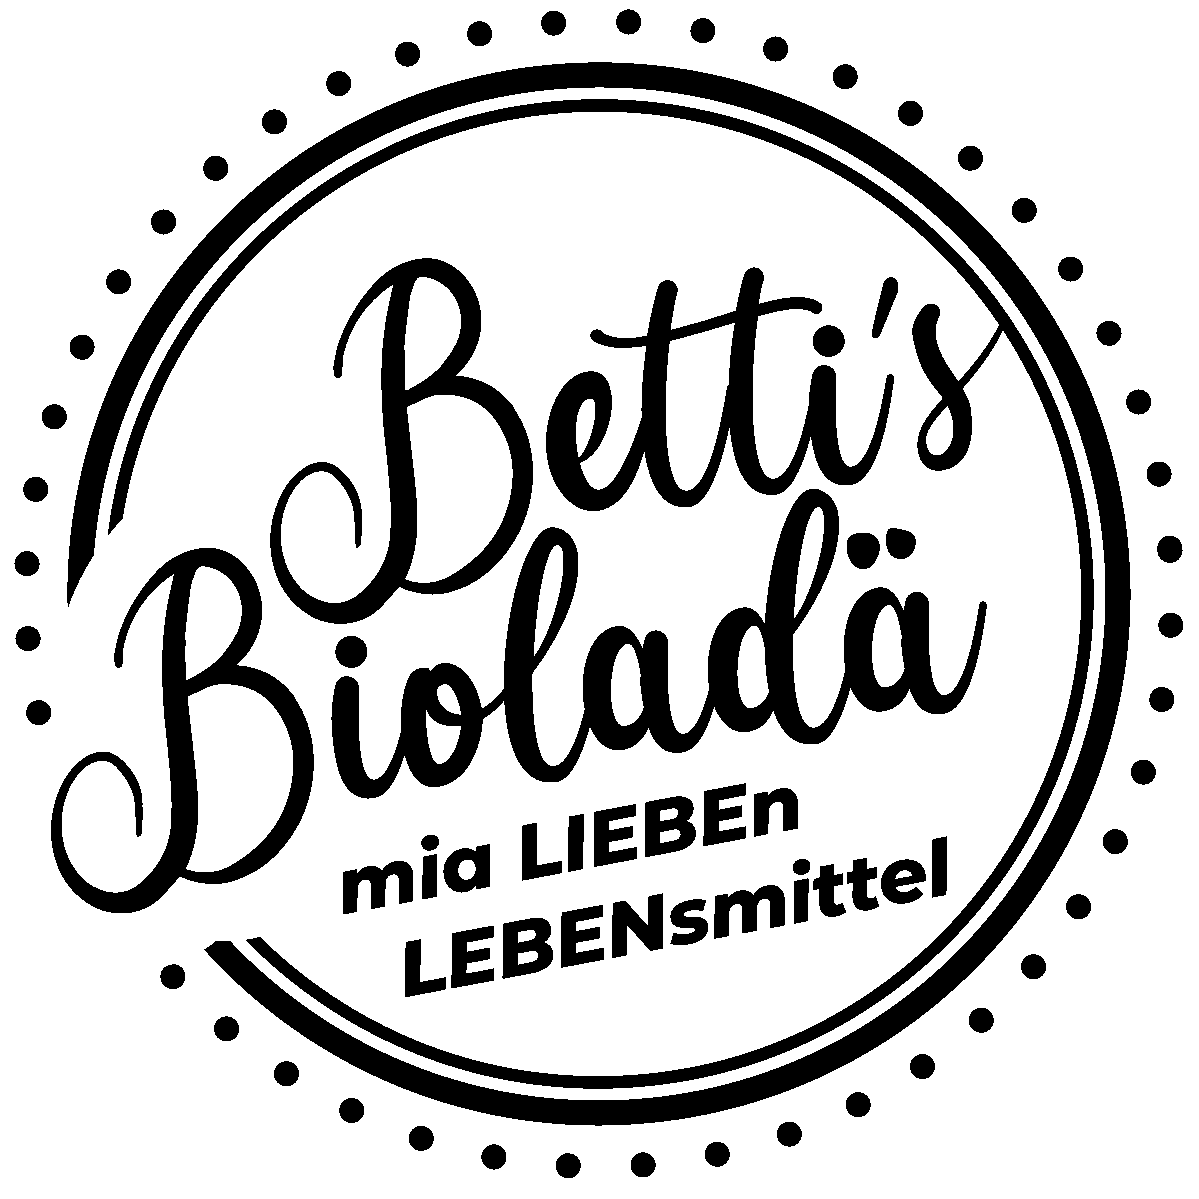 Logo Betti's Bioladä
Bettina Landsmann